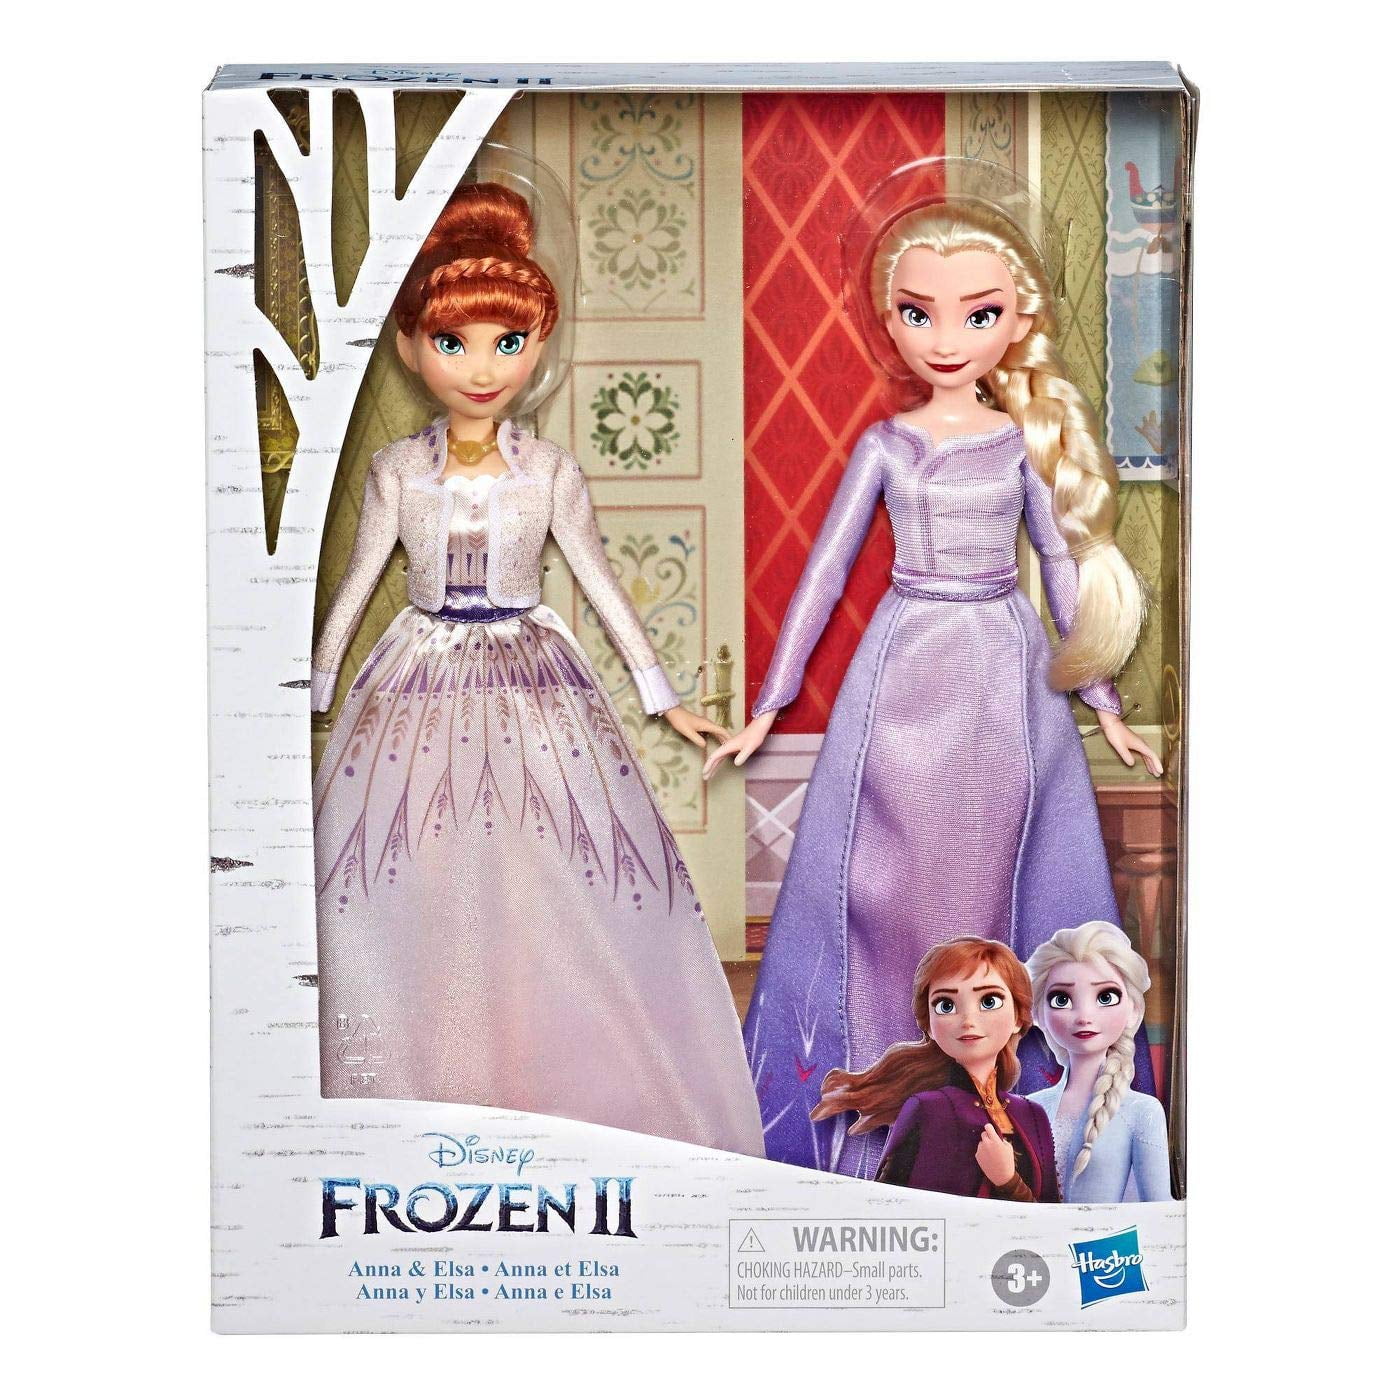 Disney Frozen 2 Elsa Fashion Doll *BRAND NEW* genuine Hasbro product 